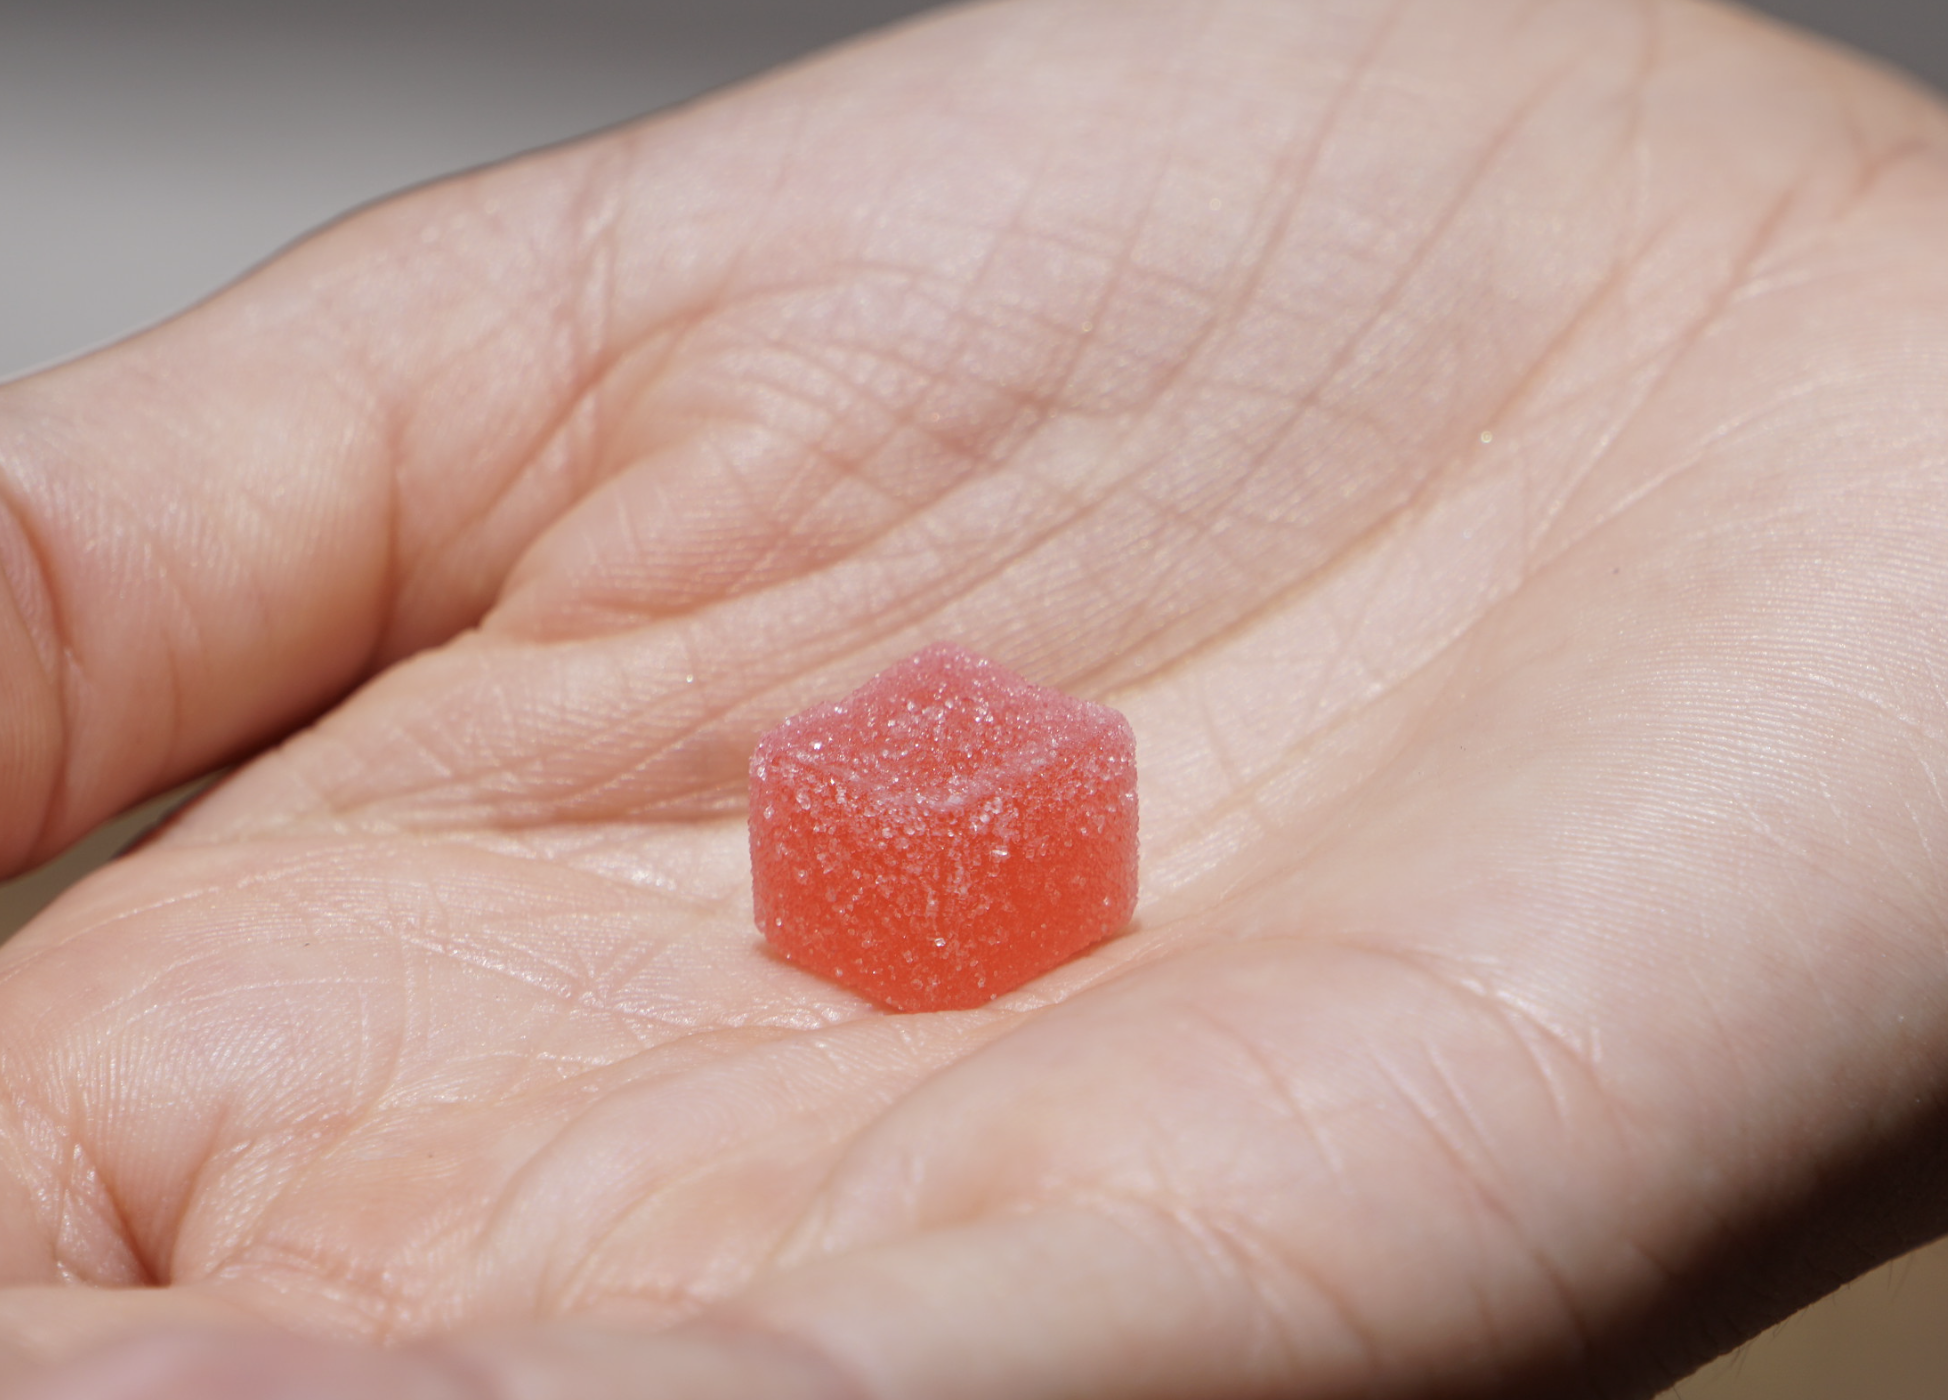 Cannabis-infused gummy